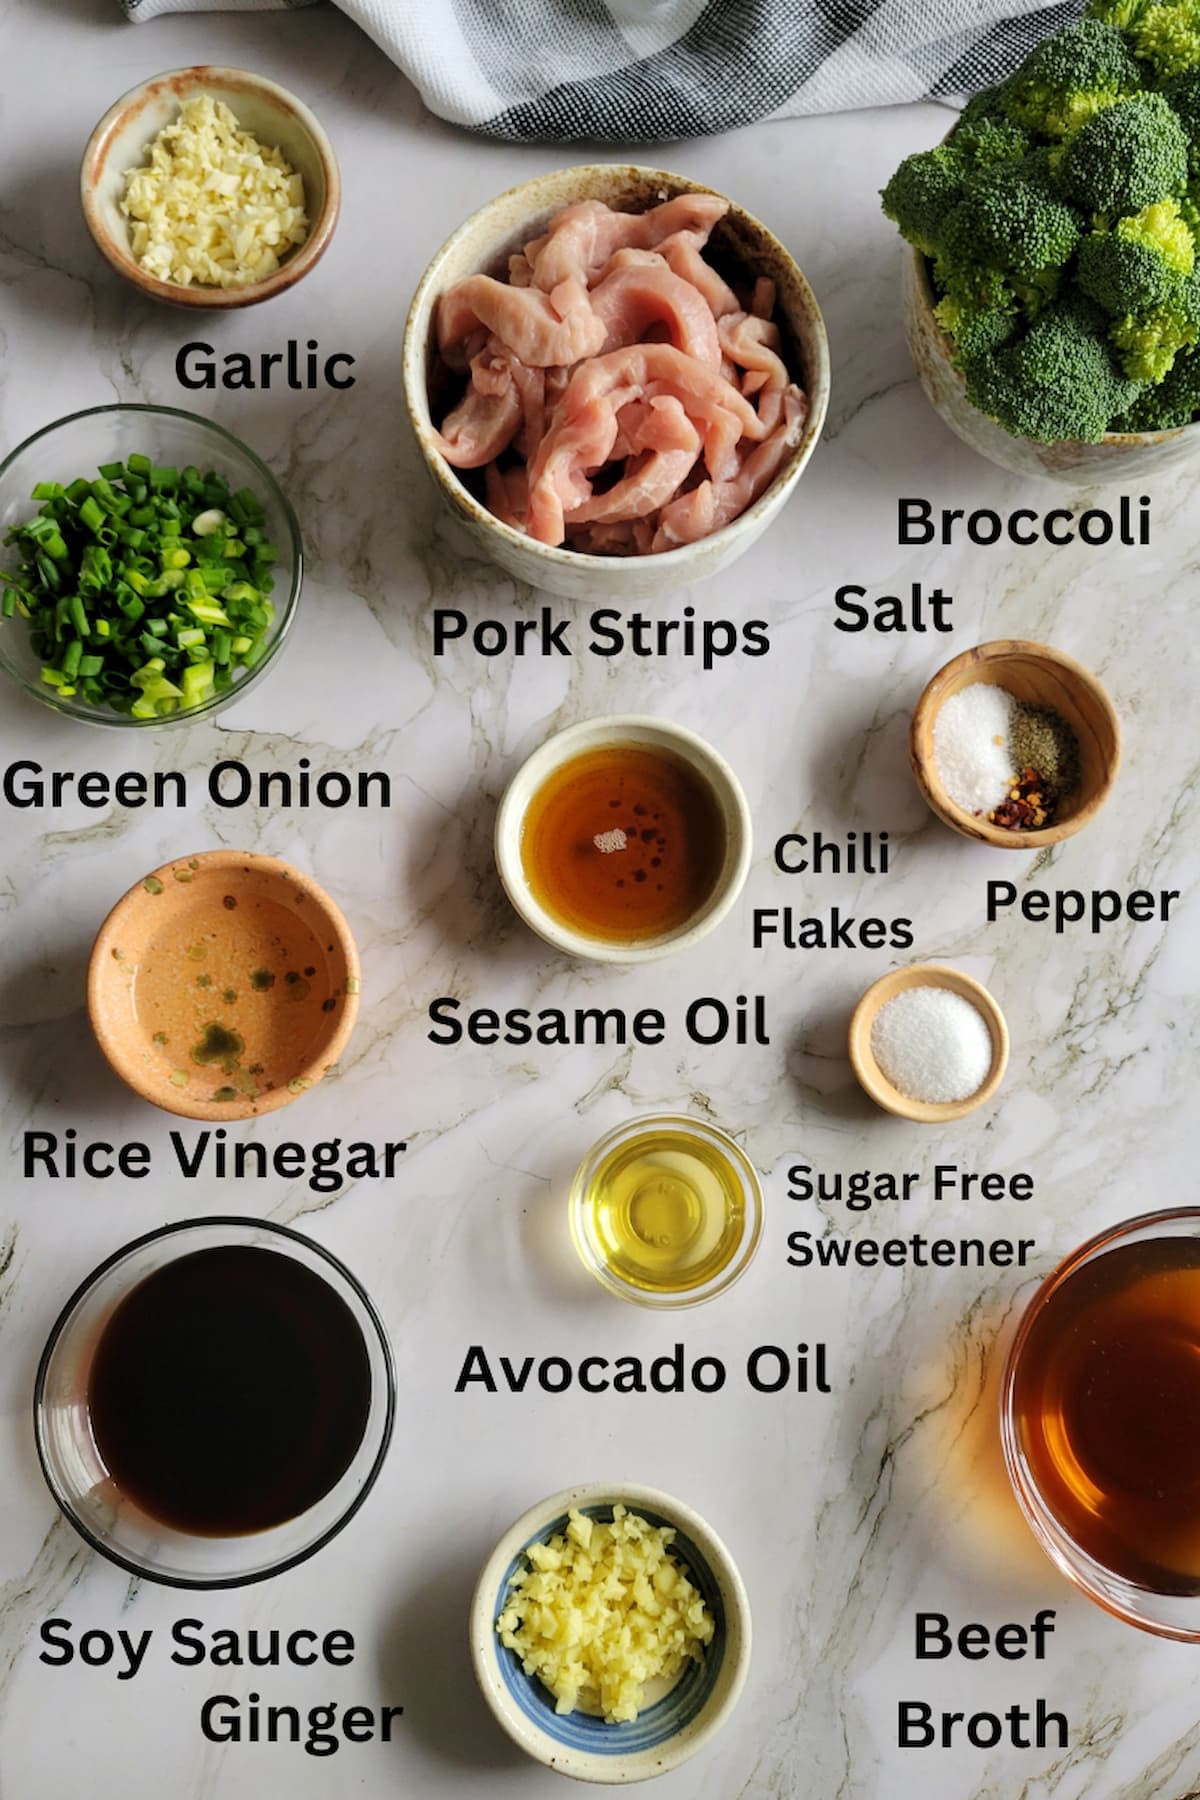 ingredients for broccoli and pork - pork strips, broccoli, garlic, ginger, soy sauce, sesame oil, avocado oil, salt, pepper, rice vinegar, green onion, sugar free sweetener, beef broth, chili flakes